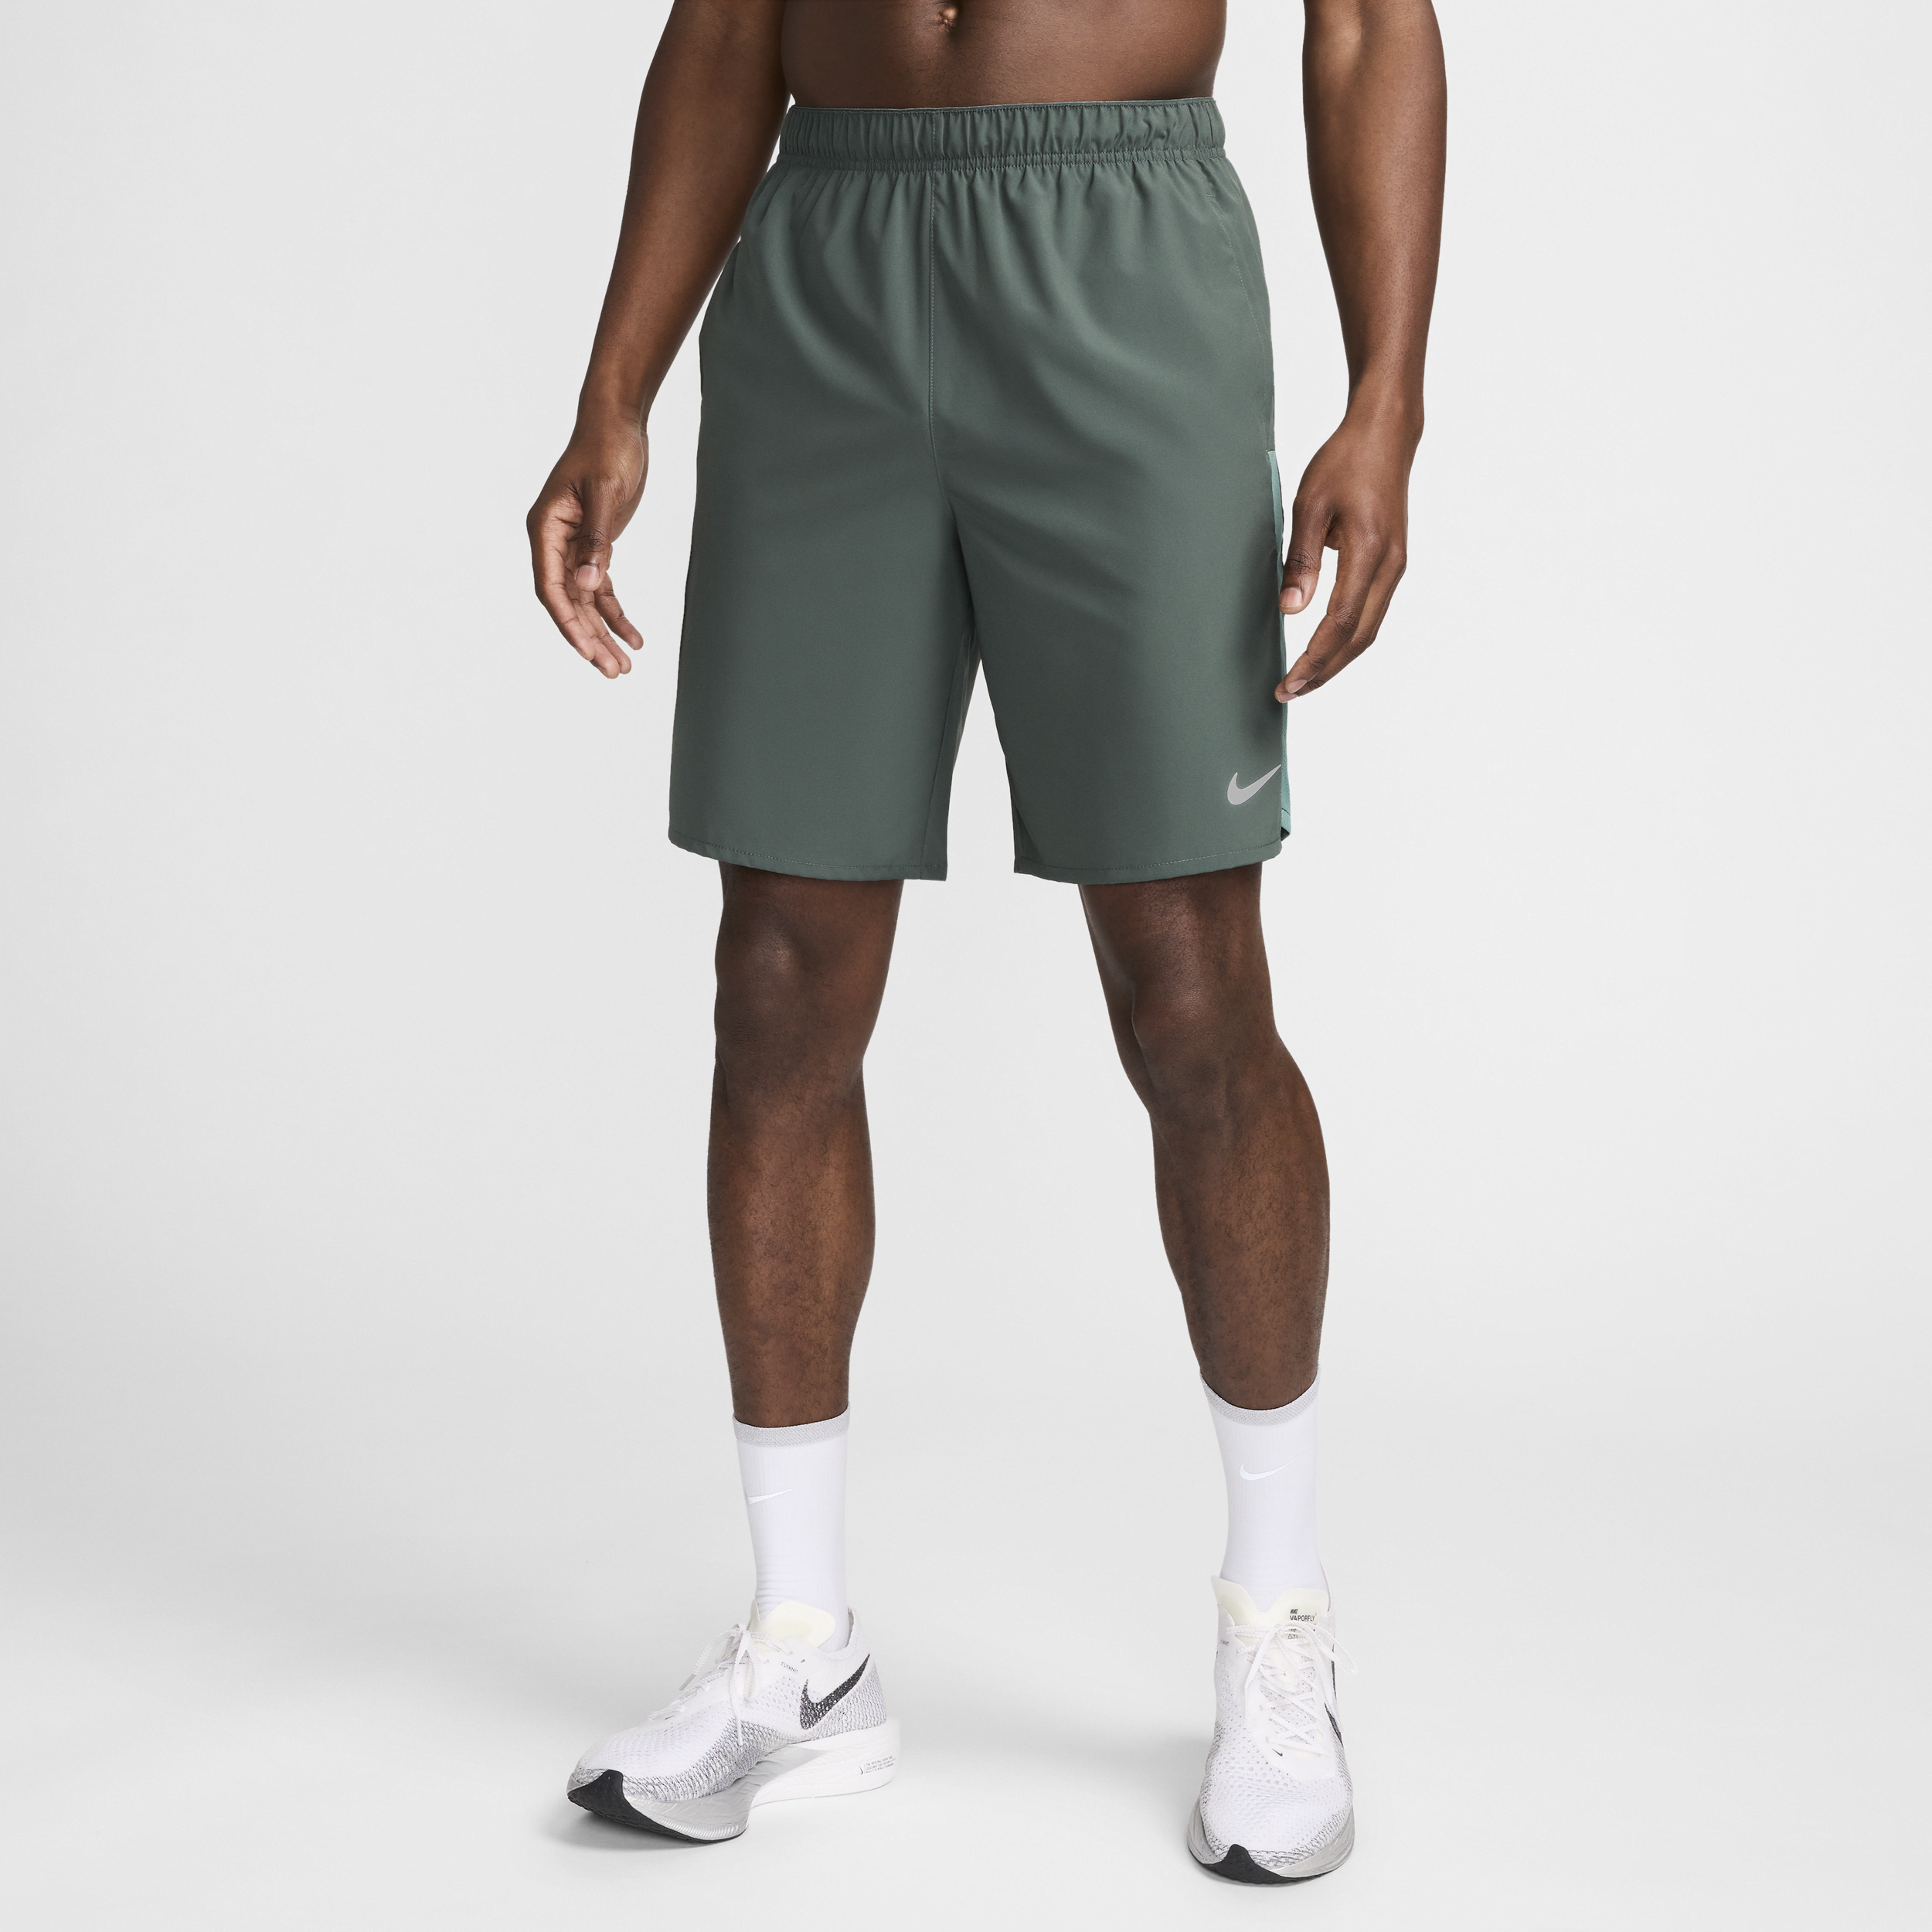 Nike Challenger Pantalón corto Dri-FIT versátil de 23 cm sin forro - Hombre - Verde